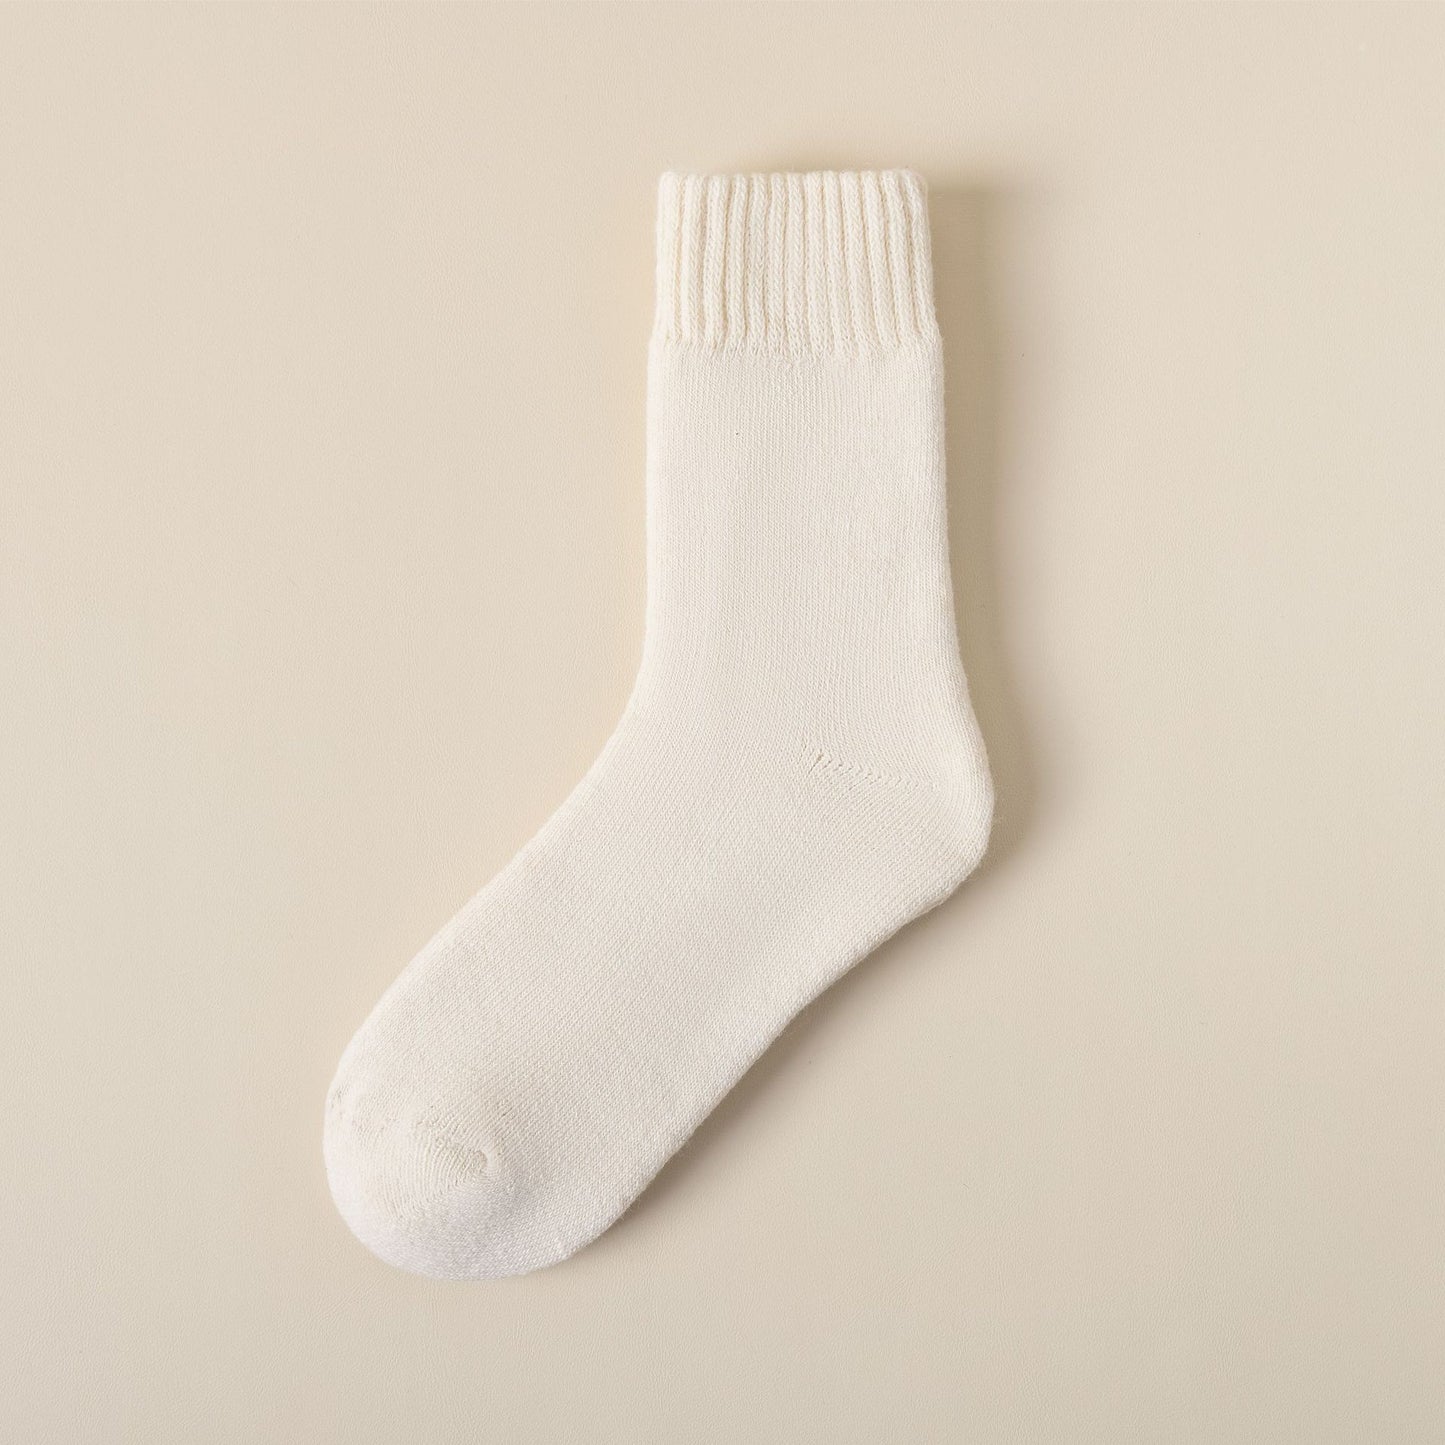 Plus Size Winter Thermal Quarter Socks(7 Pairs)